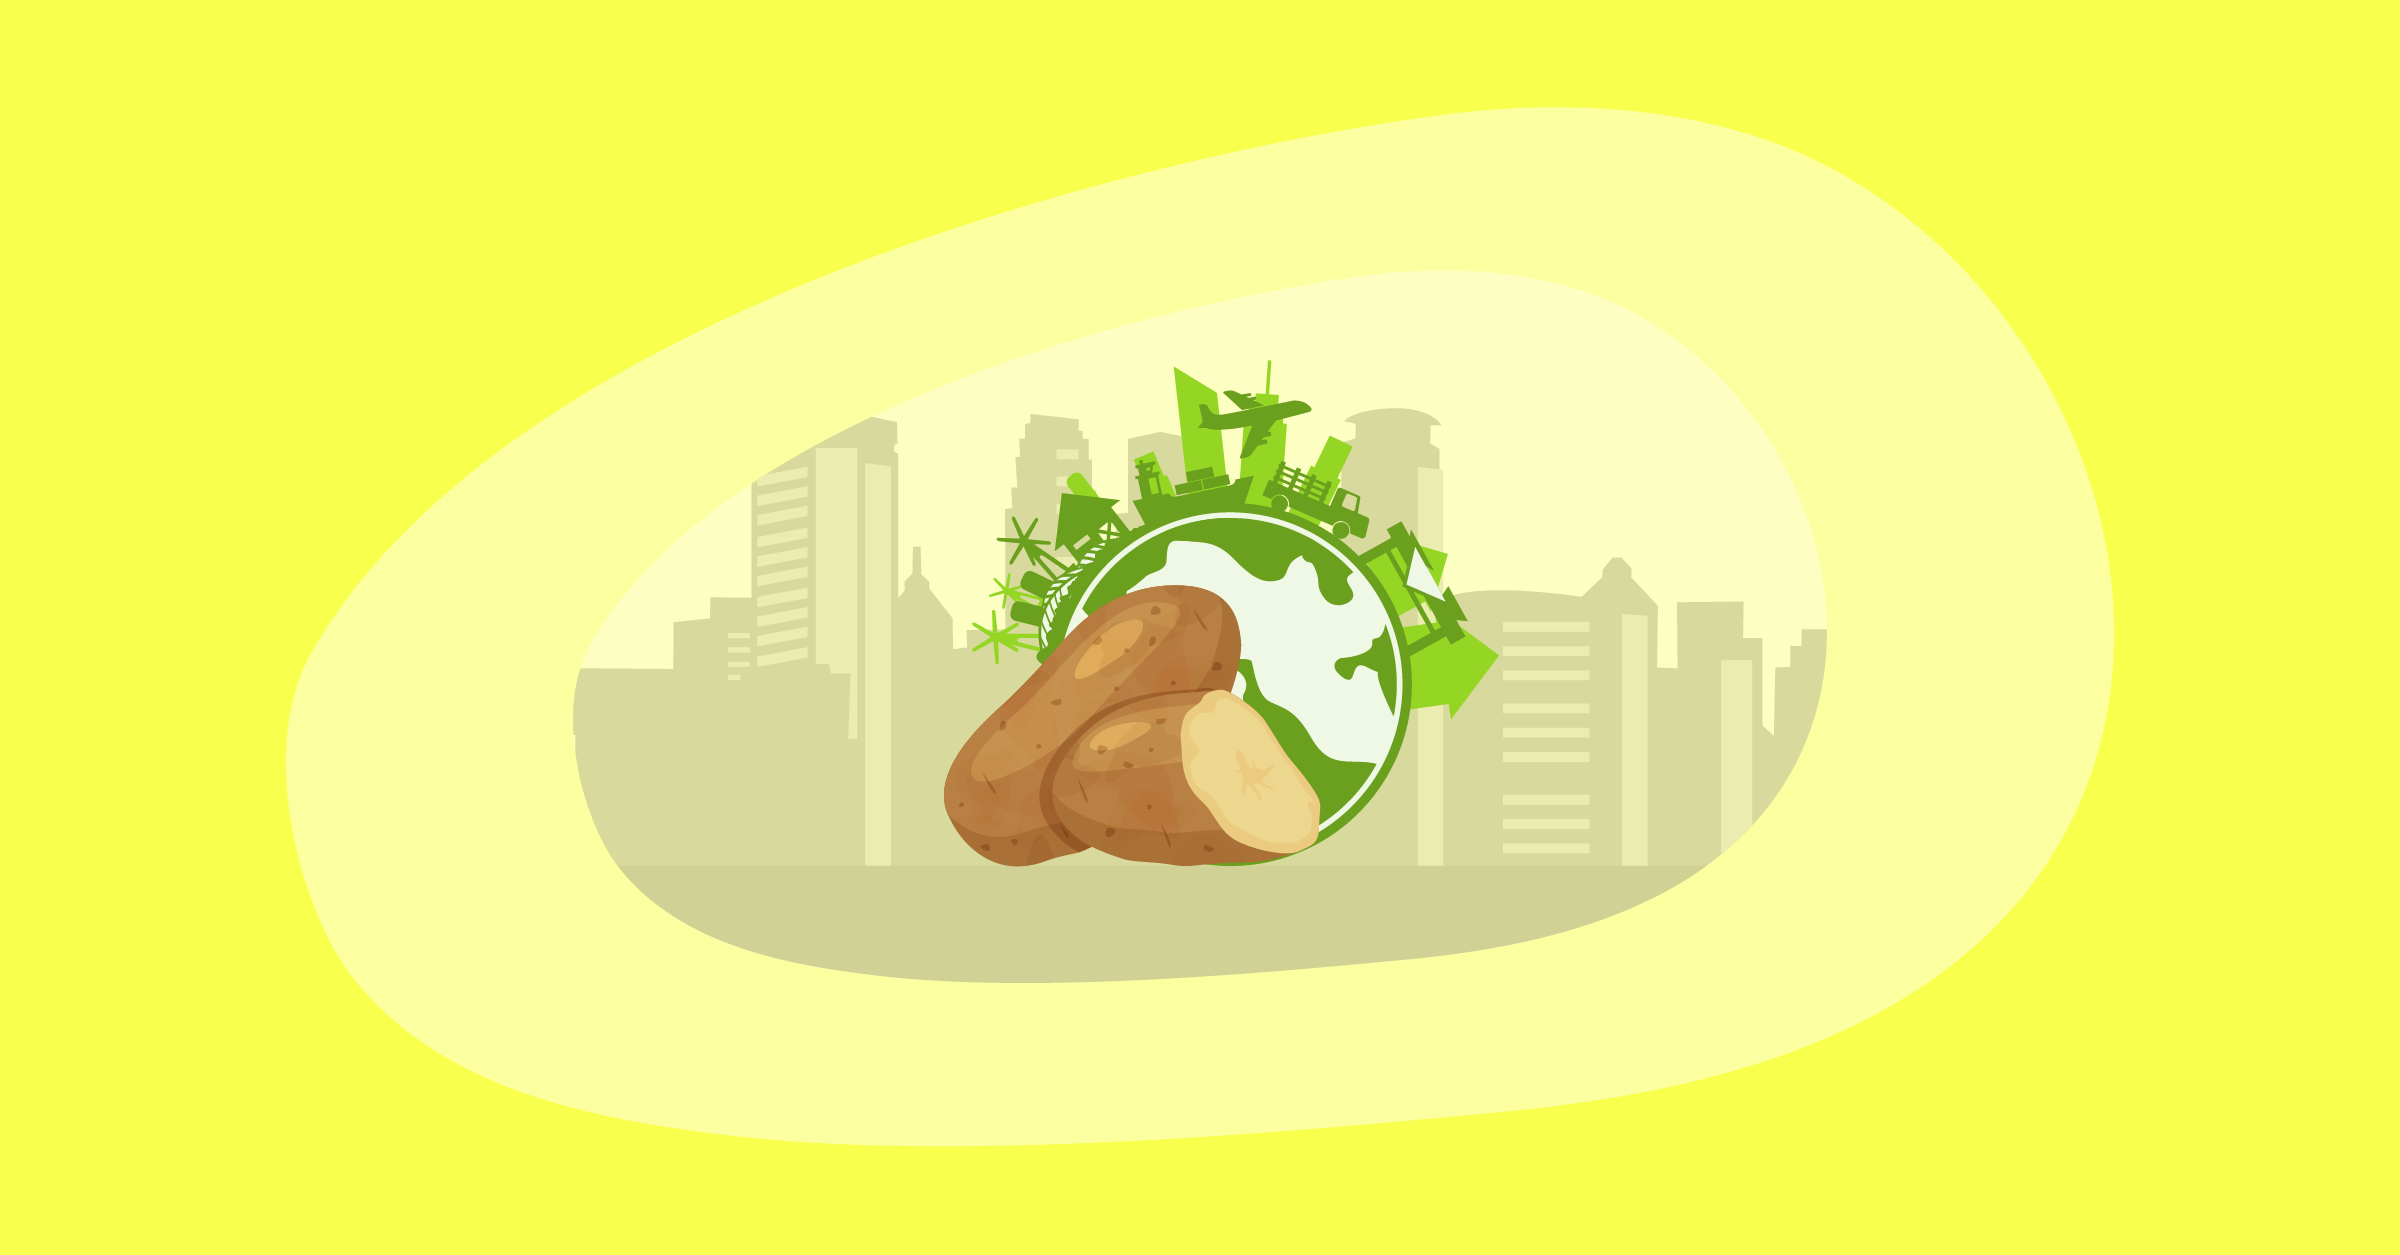 Illustration of the environmental impact of potatoes